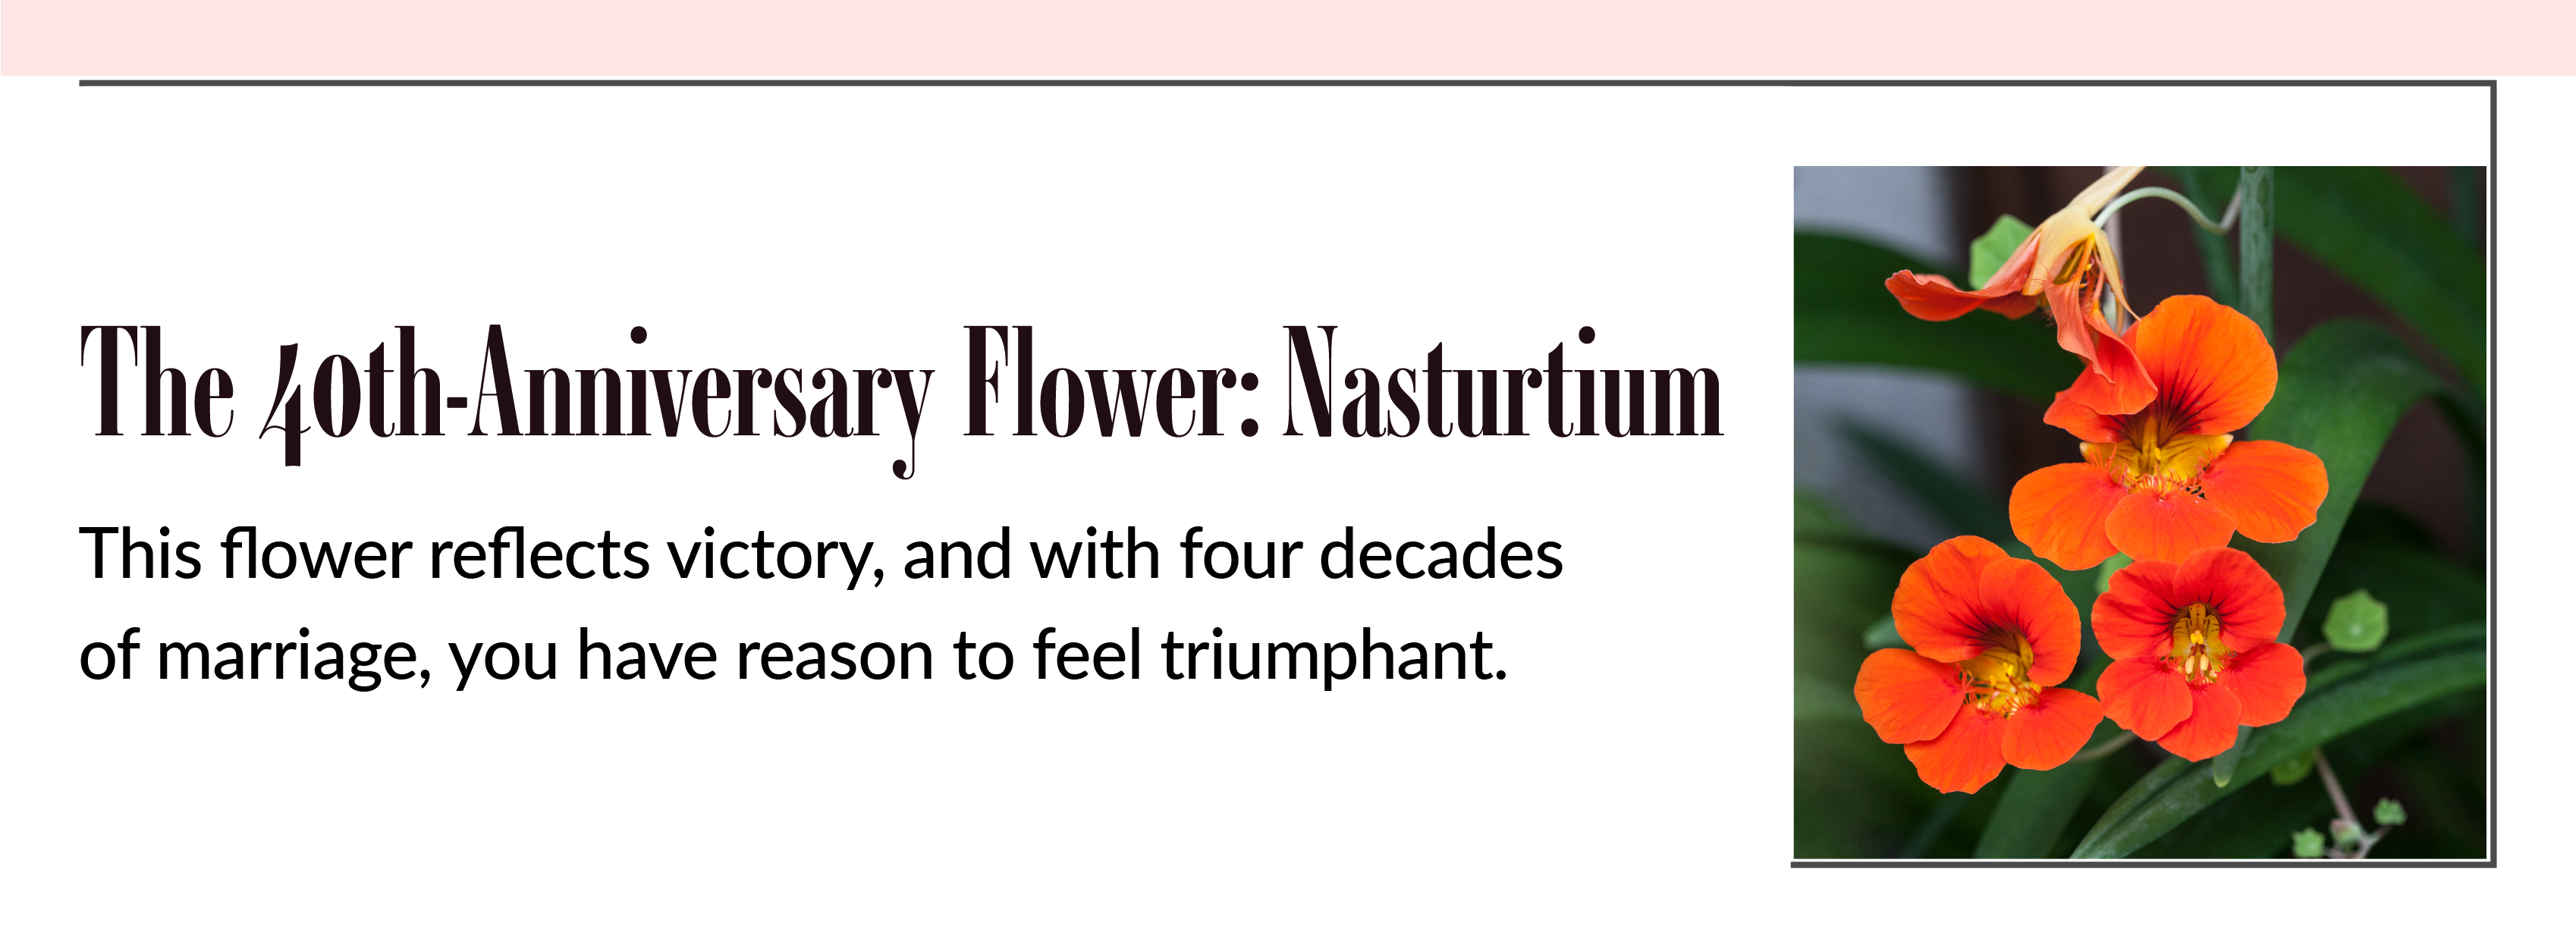 Nasturtium fortieth anniversary flowers